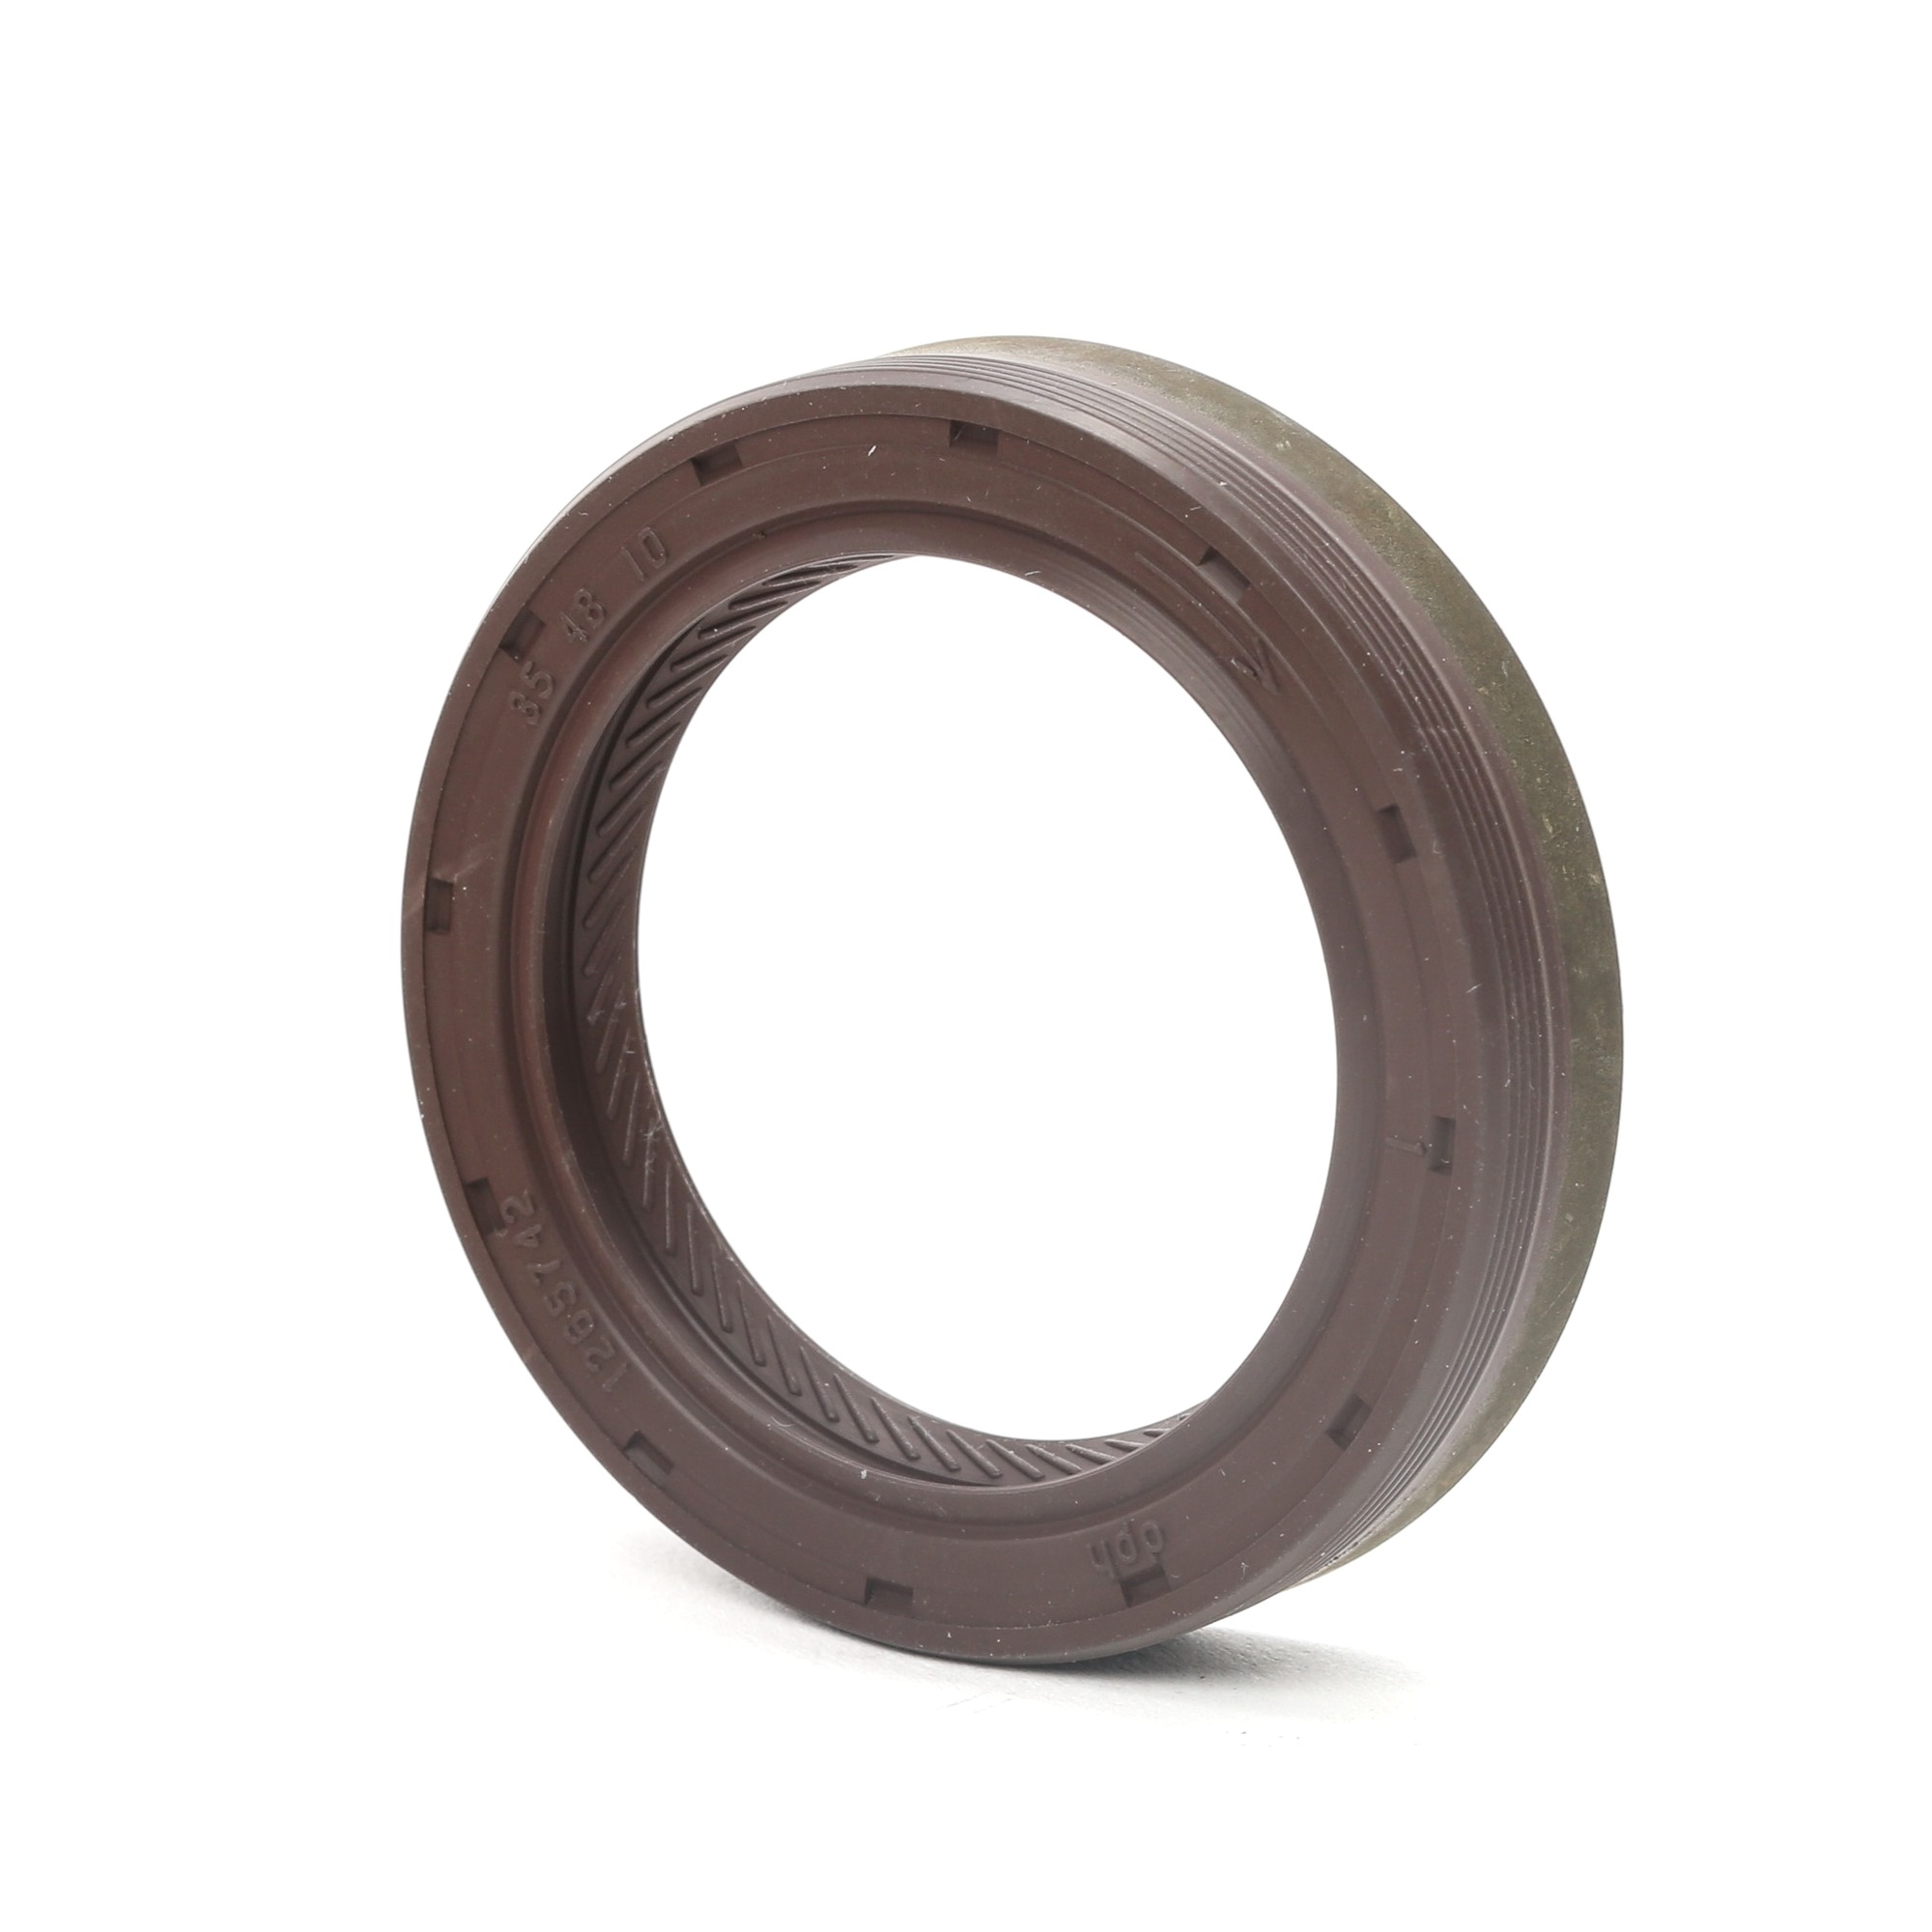 V10-3263 VAICO Crankshaft oil seal HONDA Q+, original equipment manufacturer quality, frontal sided, FPM (fluoride rubber)